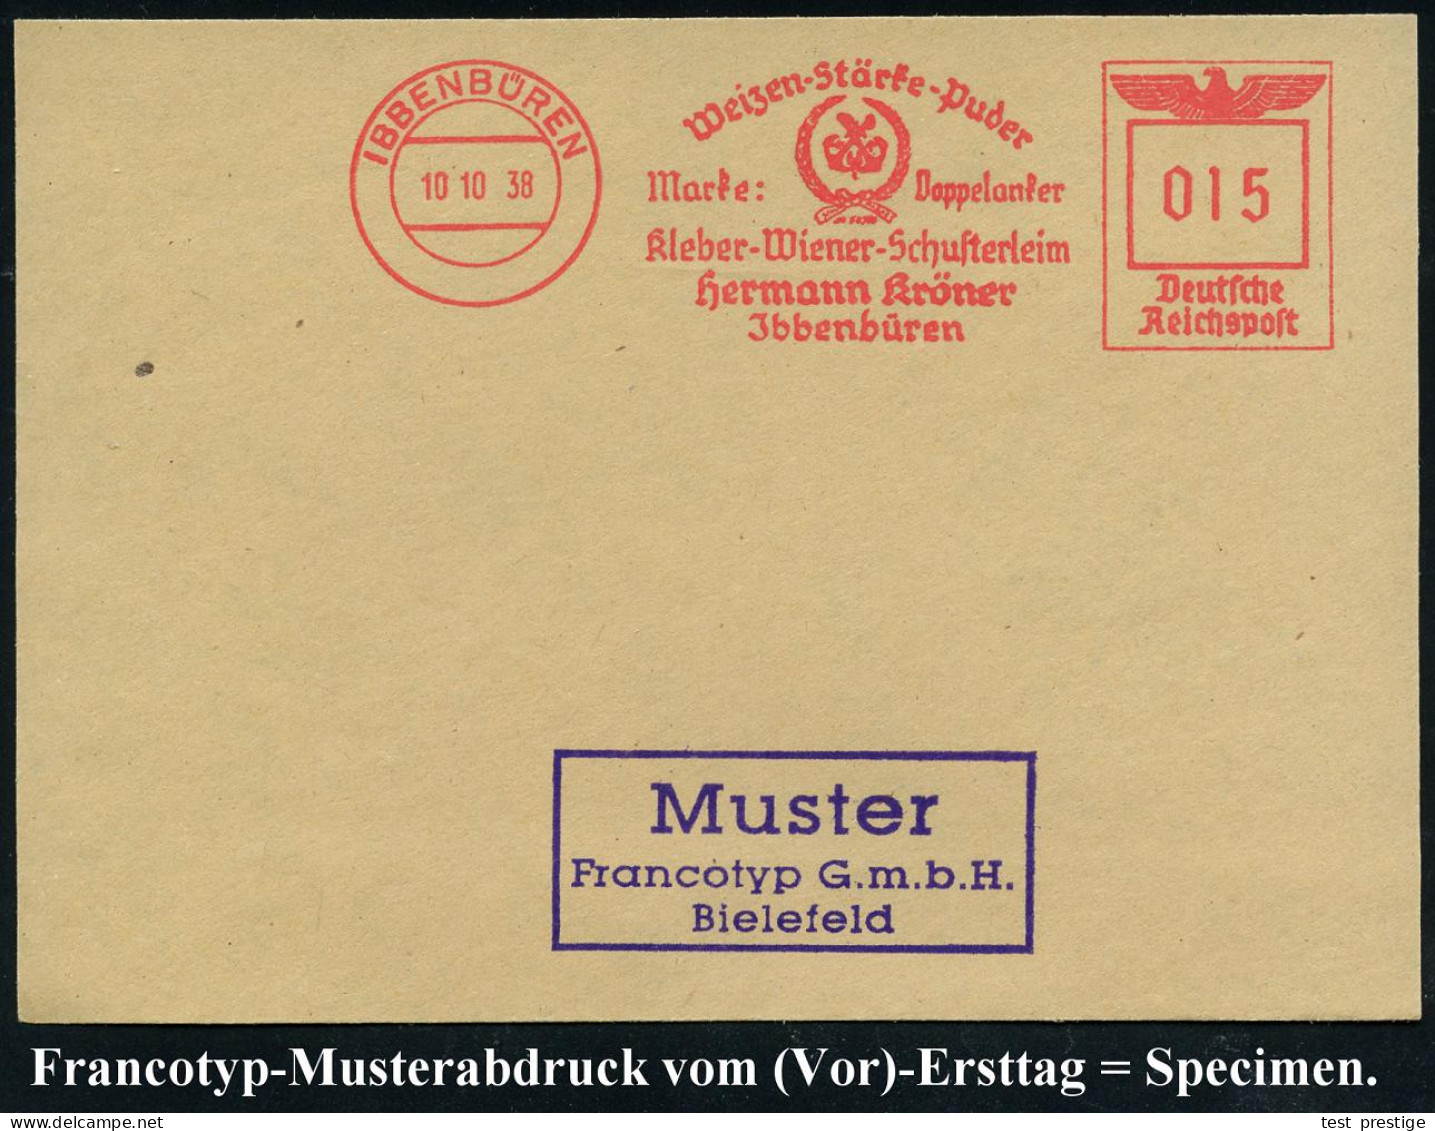 IBBENBÜREN/ Weizen-Stärke-Puder/ Marke: Doppelanker/ Kleber-Wiener-Schusterleim/ Hermann Kröner 1938 (10.10.) AFS-Muster - Química